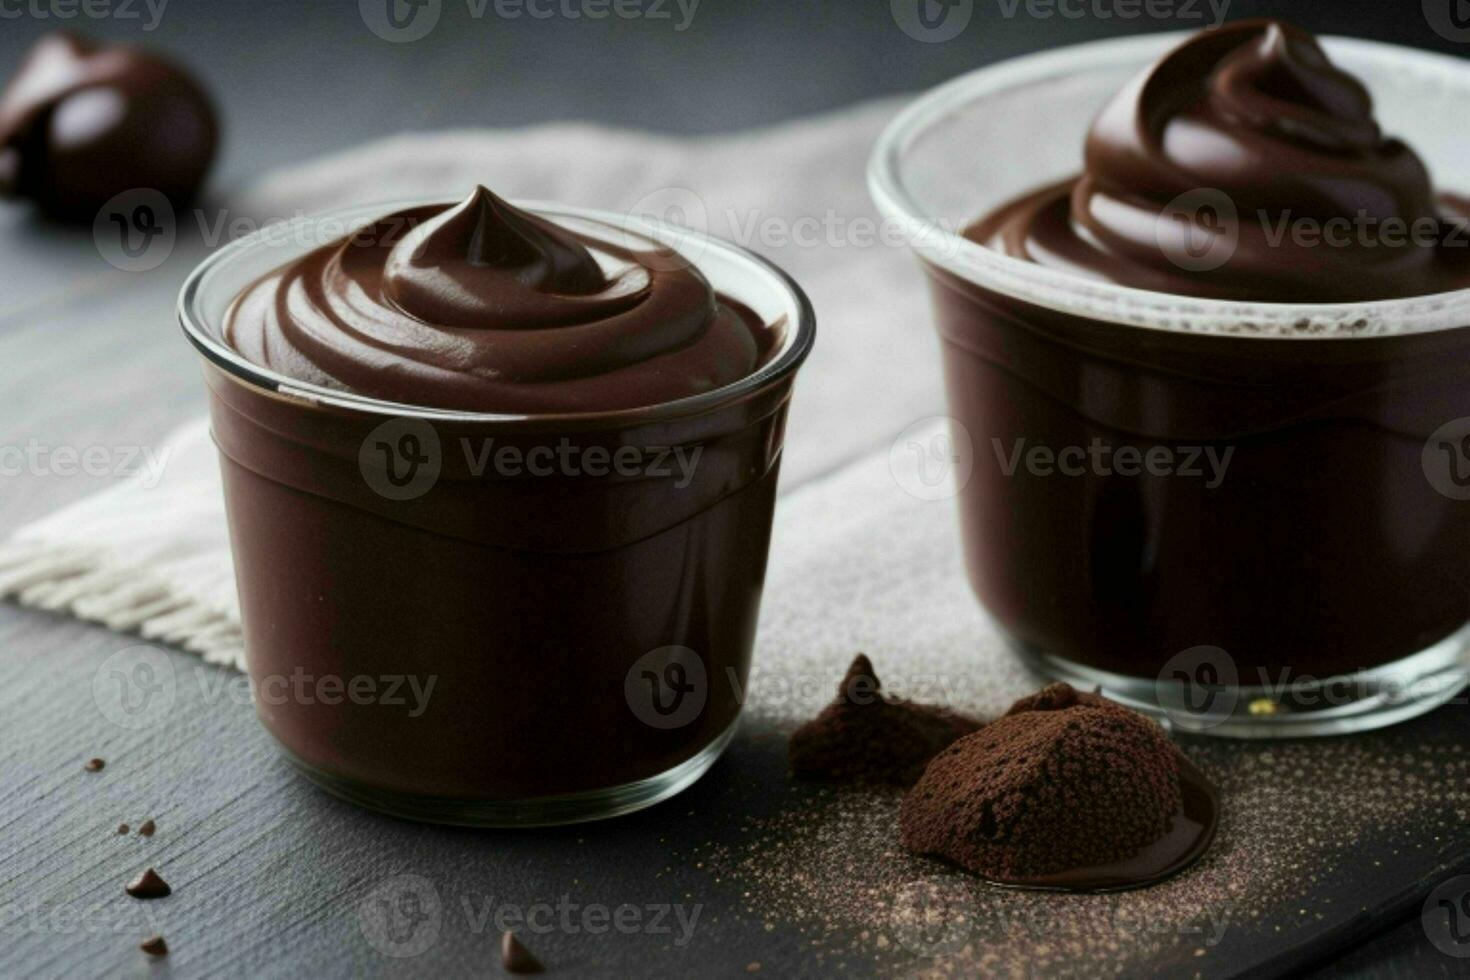 ai gegenereerd chocola pudding. pro foto